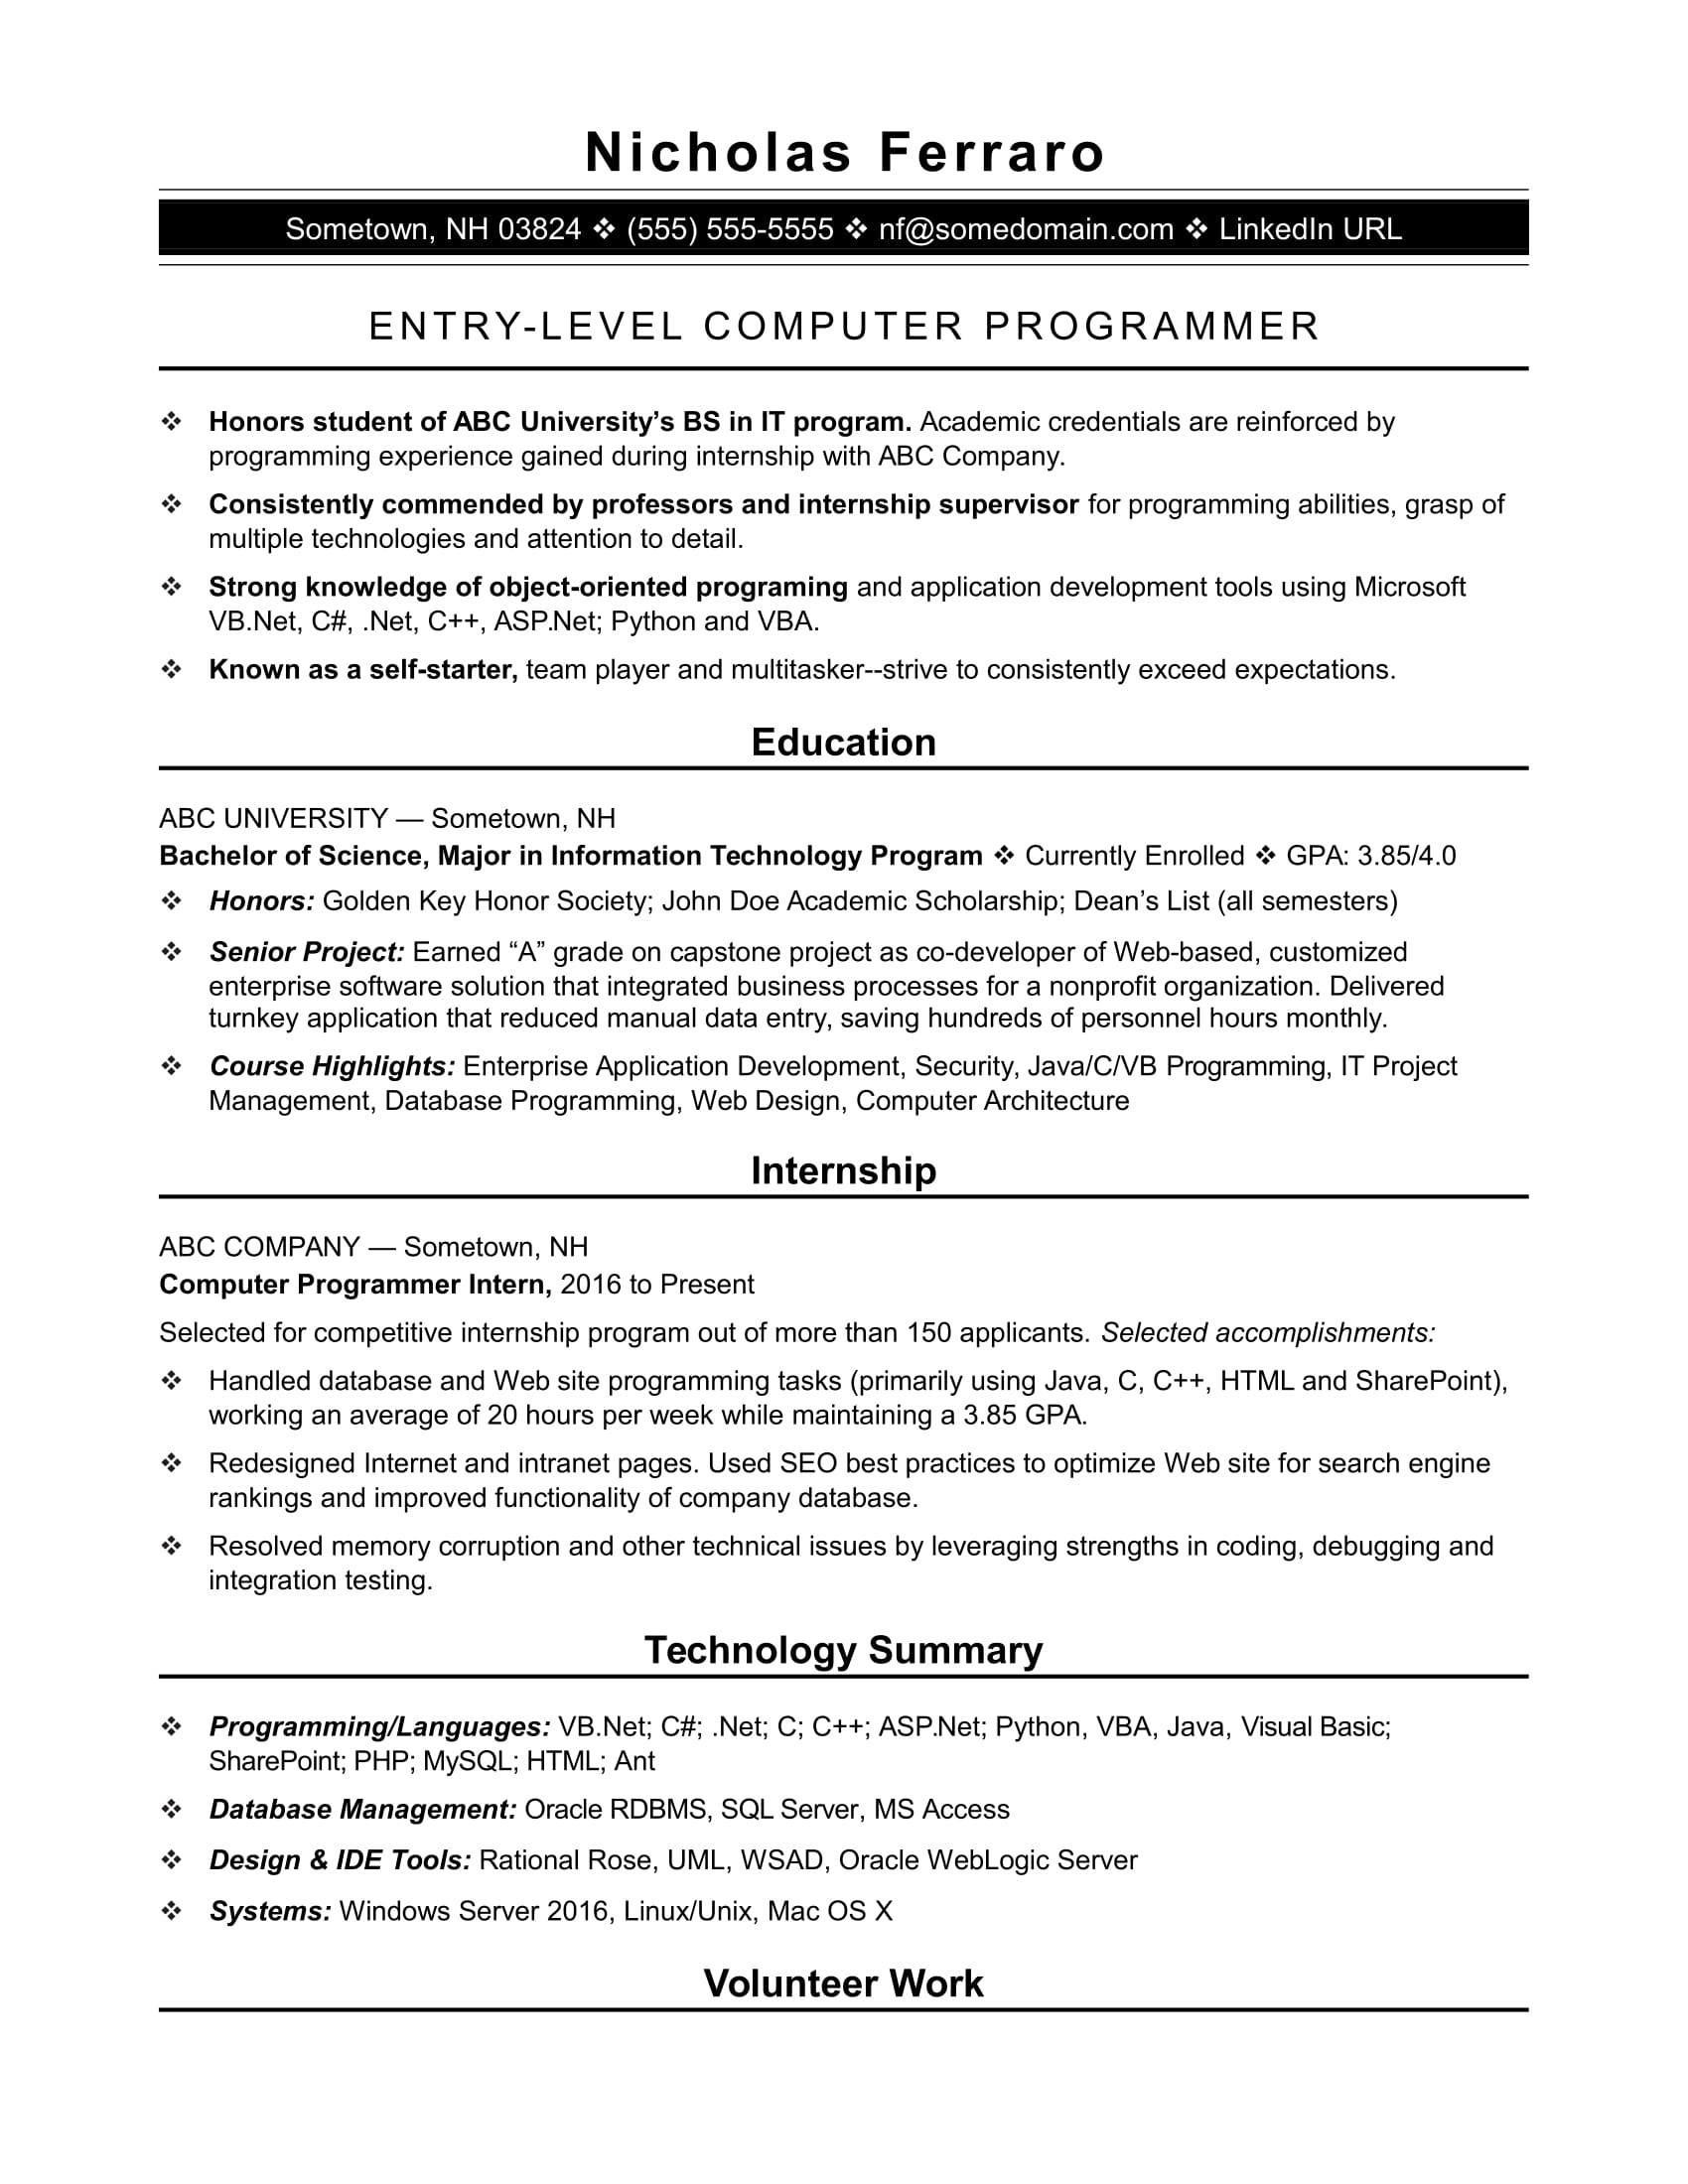 Sample Resume Objective Statement for Computer Science Entry-level Programmer Resume Monster.com